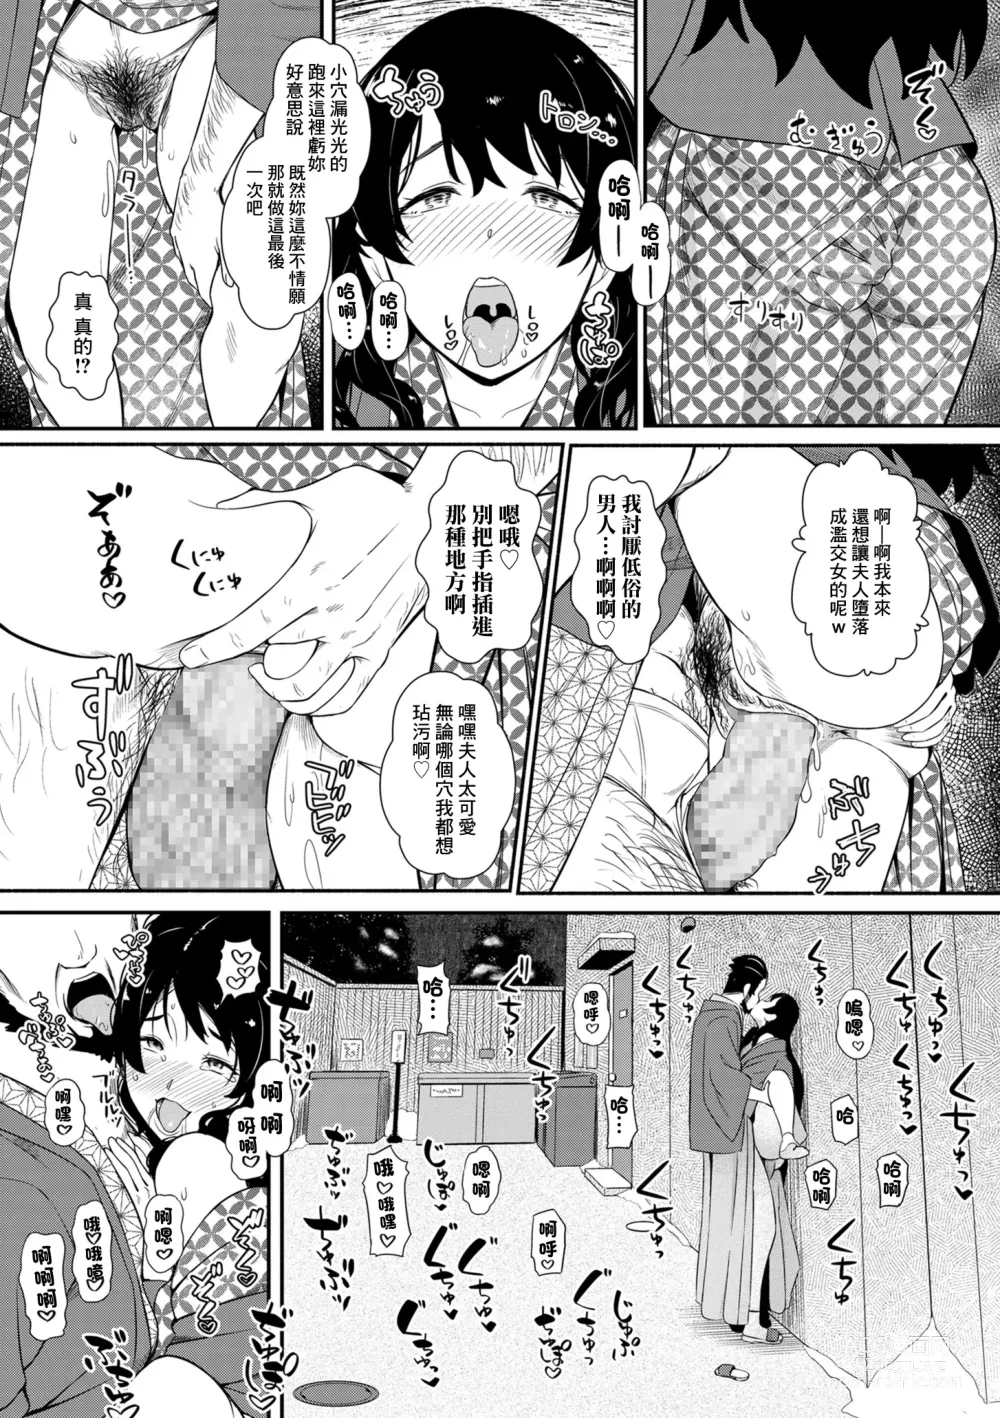 Page 17 of manga Haha wa Tabi no Owari ni...